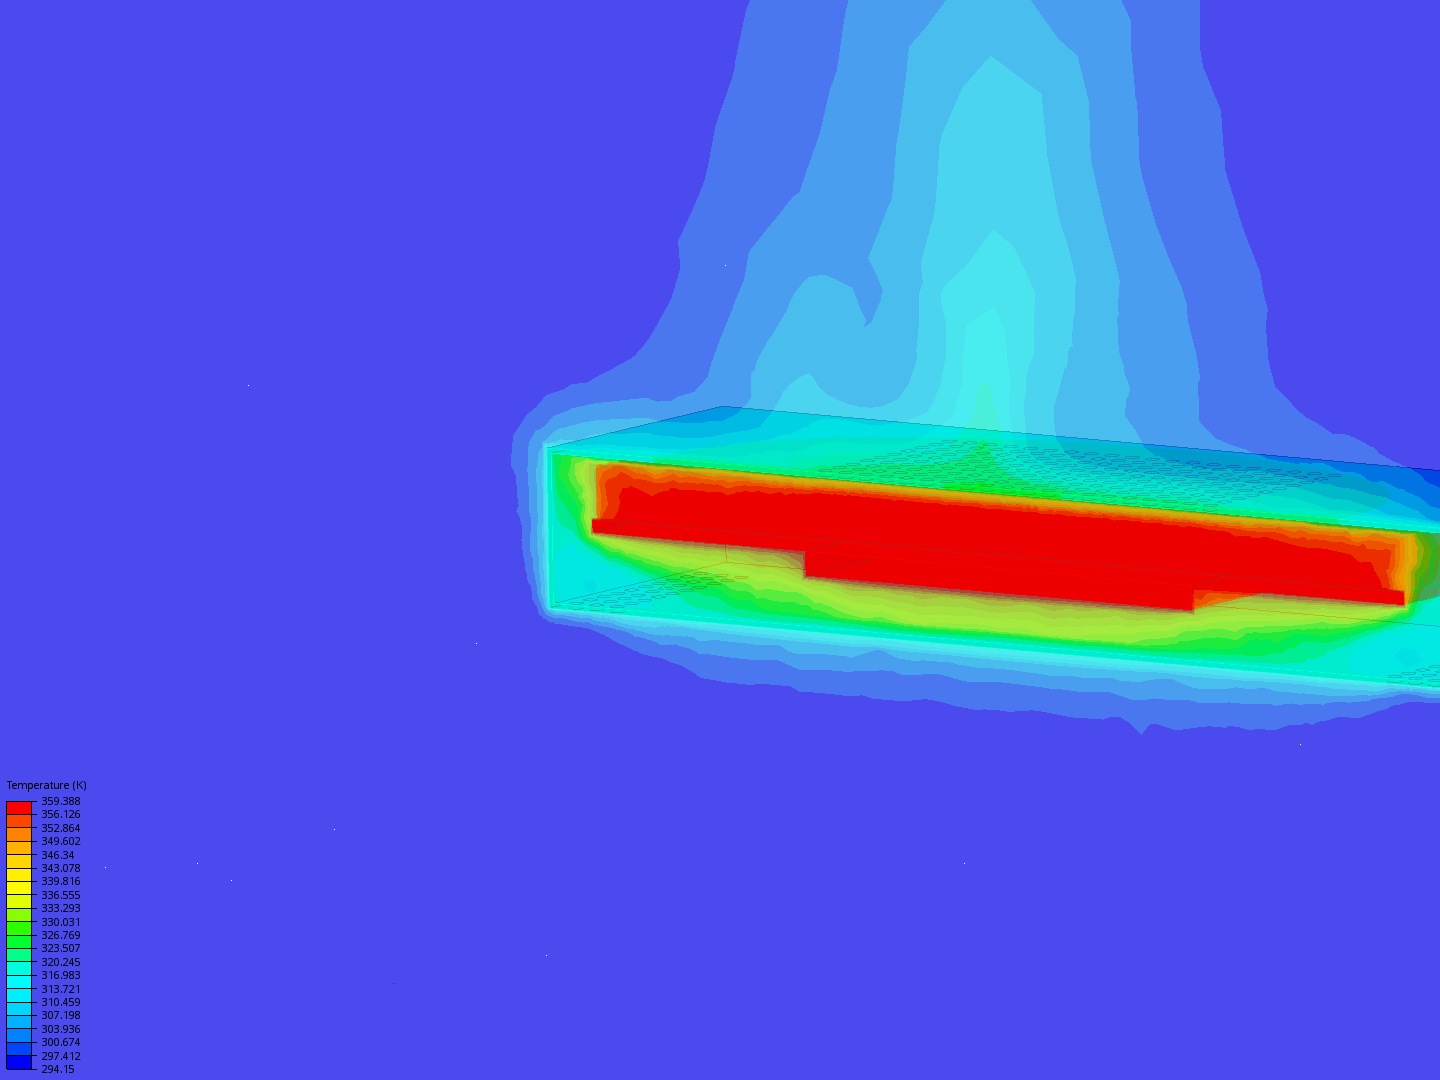 V2 internal heat sink image